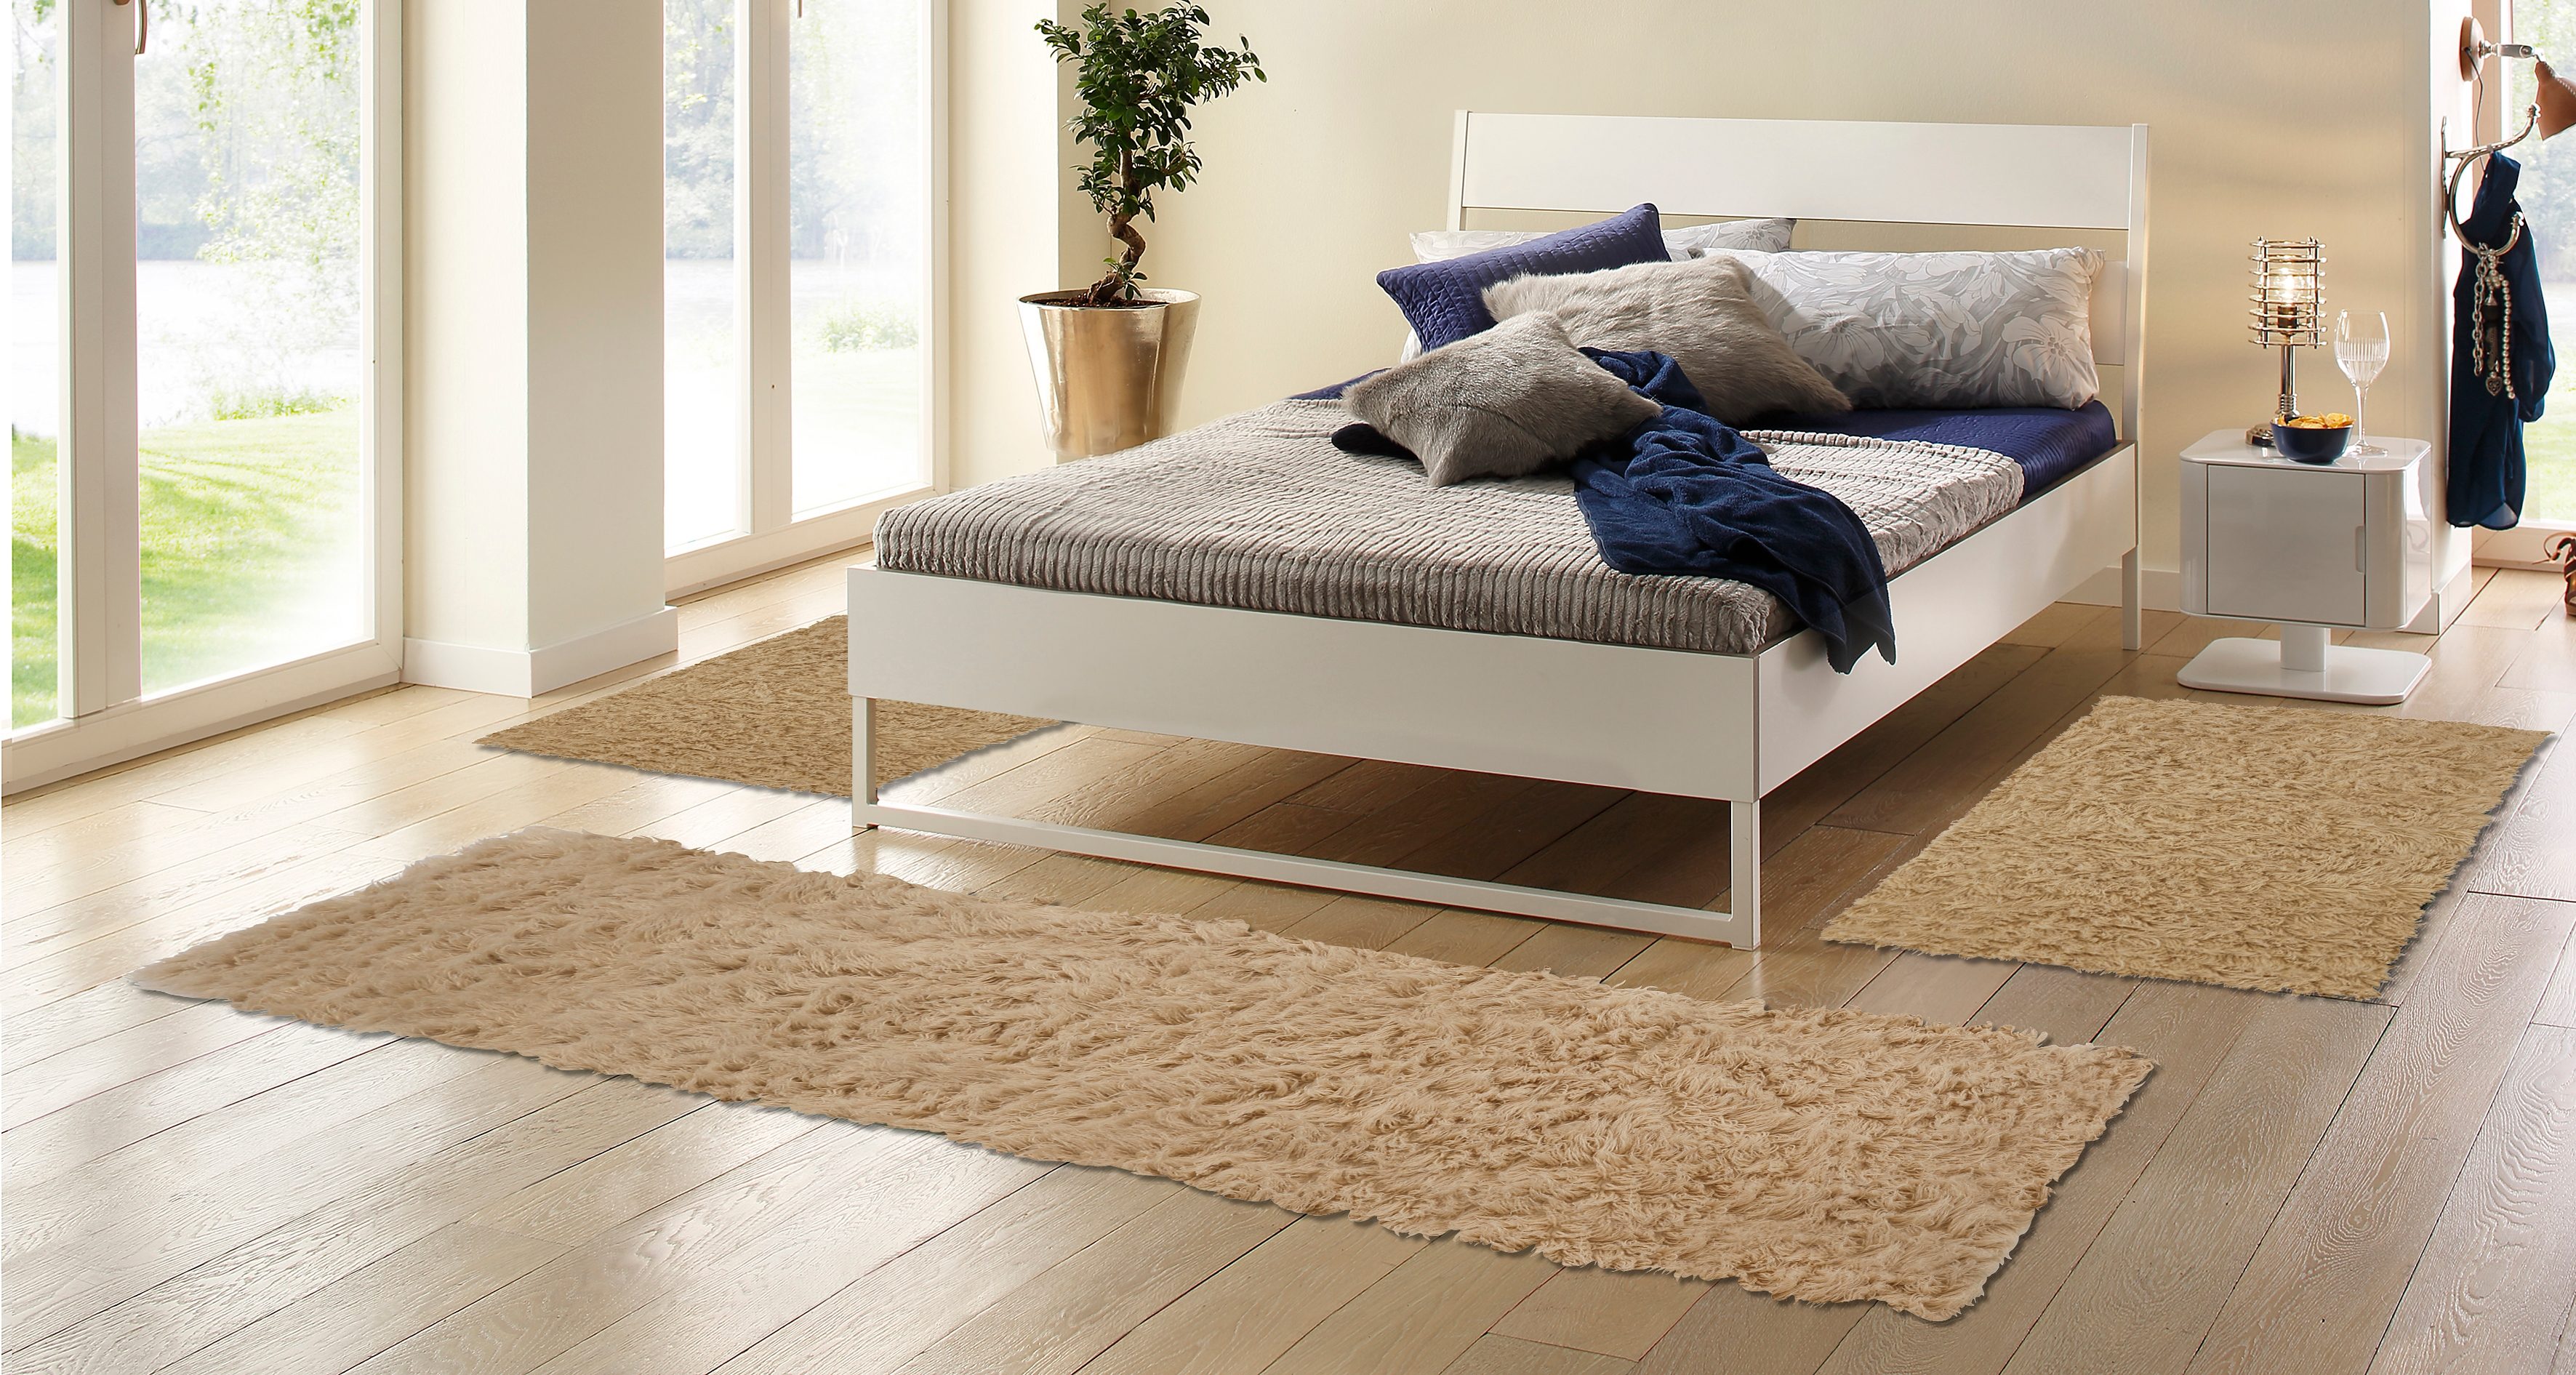 Böing Carpet Bettumrandung "Flokati 1500 g", (3 tlg.), Bettvorleger, Läufer-Set, Uni-Farben, reine Wolle, handgewebt